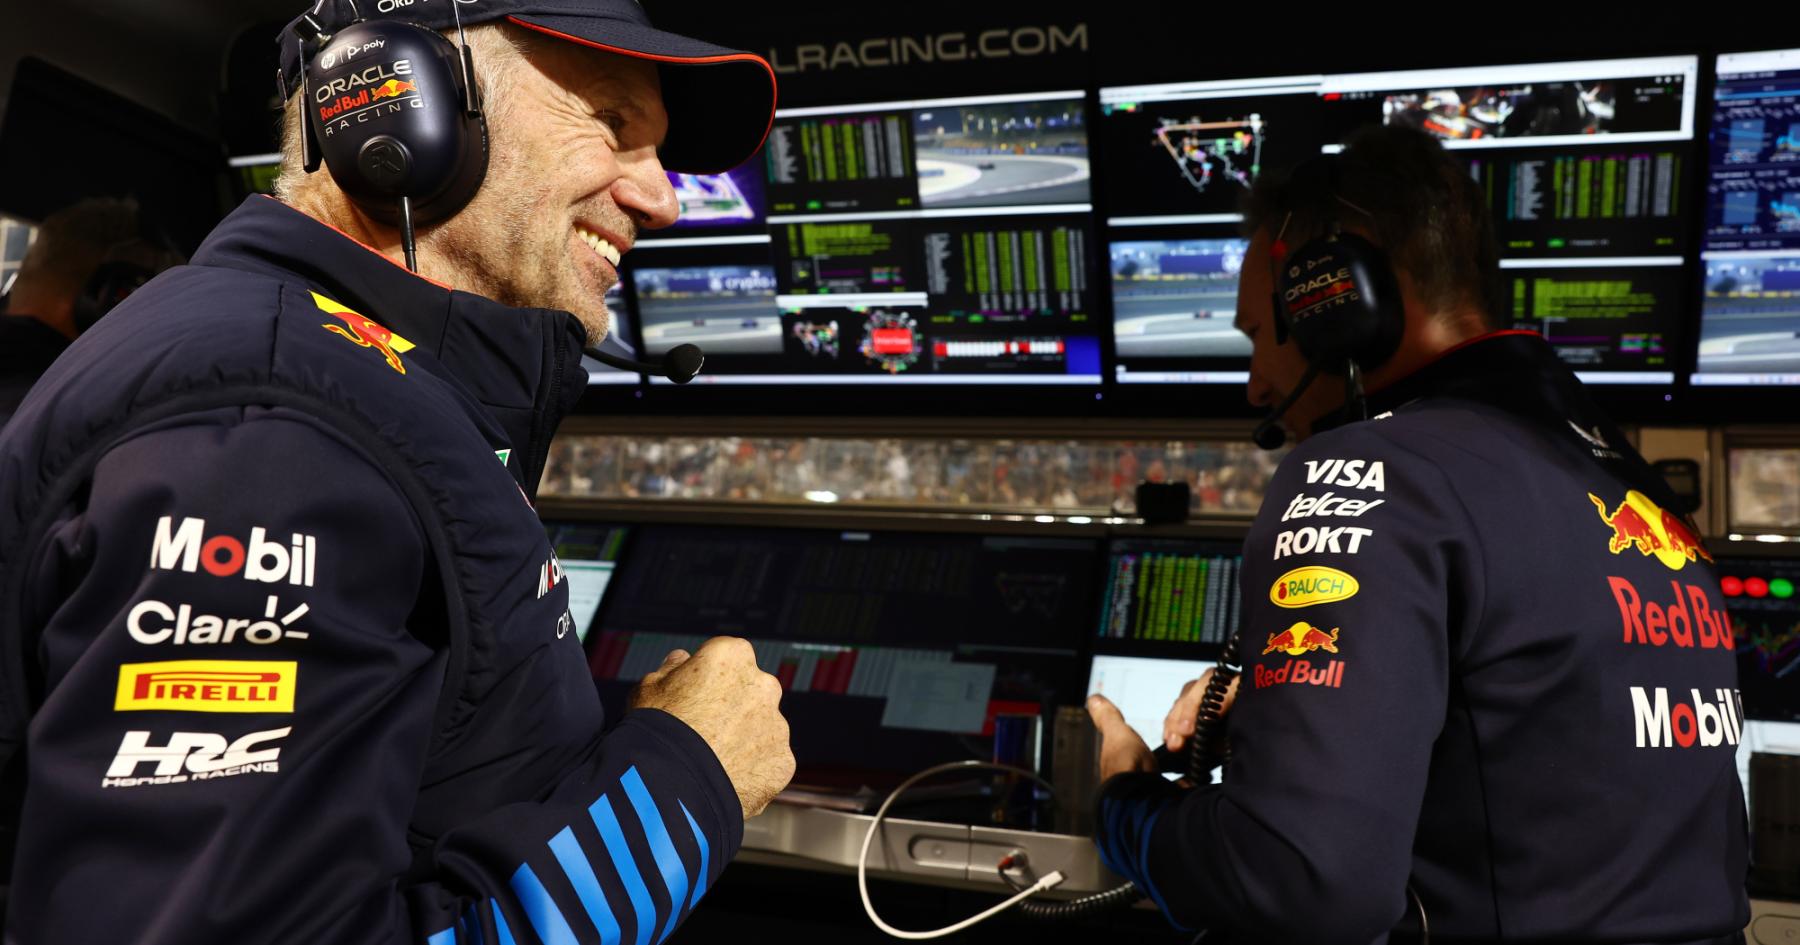 Legendary F1 Designer Adrian Newey Set to Depart Red Bull Racing After This Season - Shocking Revelations Surface